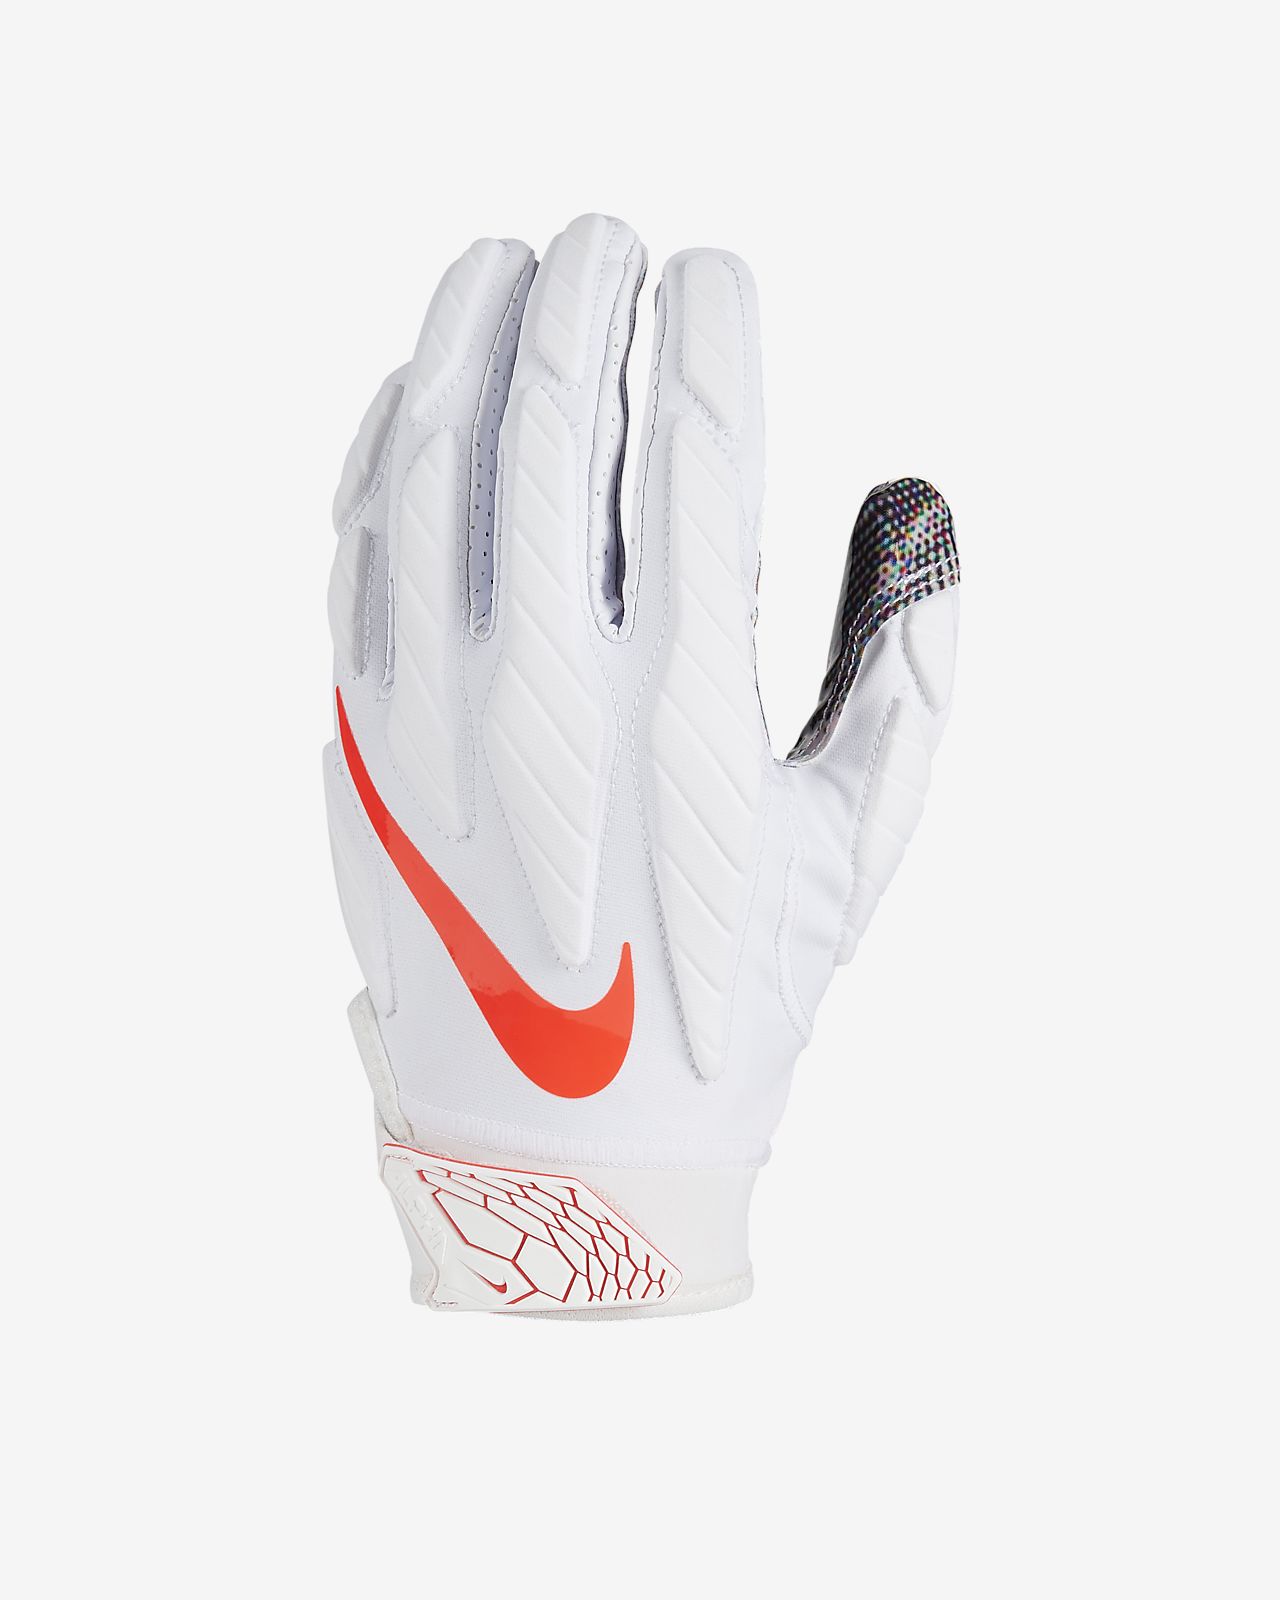 Nike Football Glove Size Chart